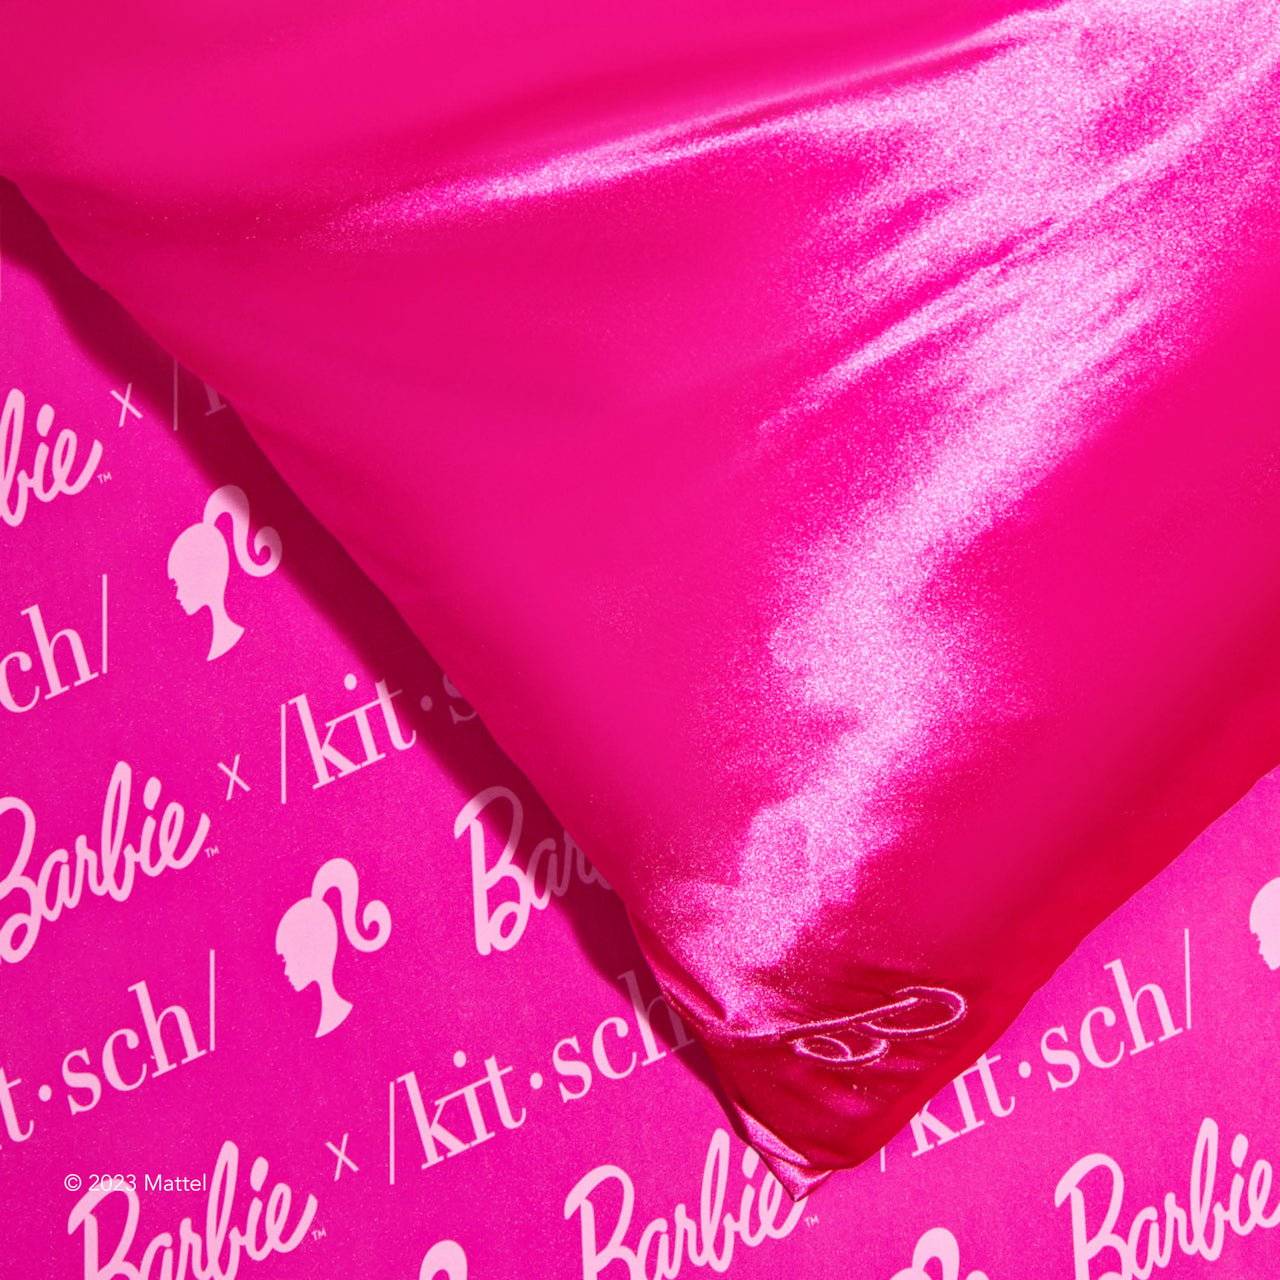 Barbie™ x Kitsch King verzamelbundel